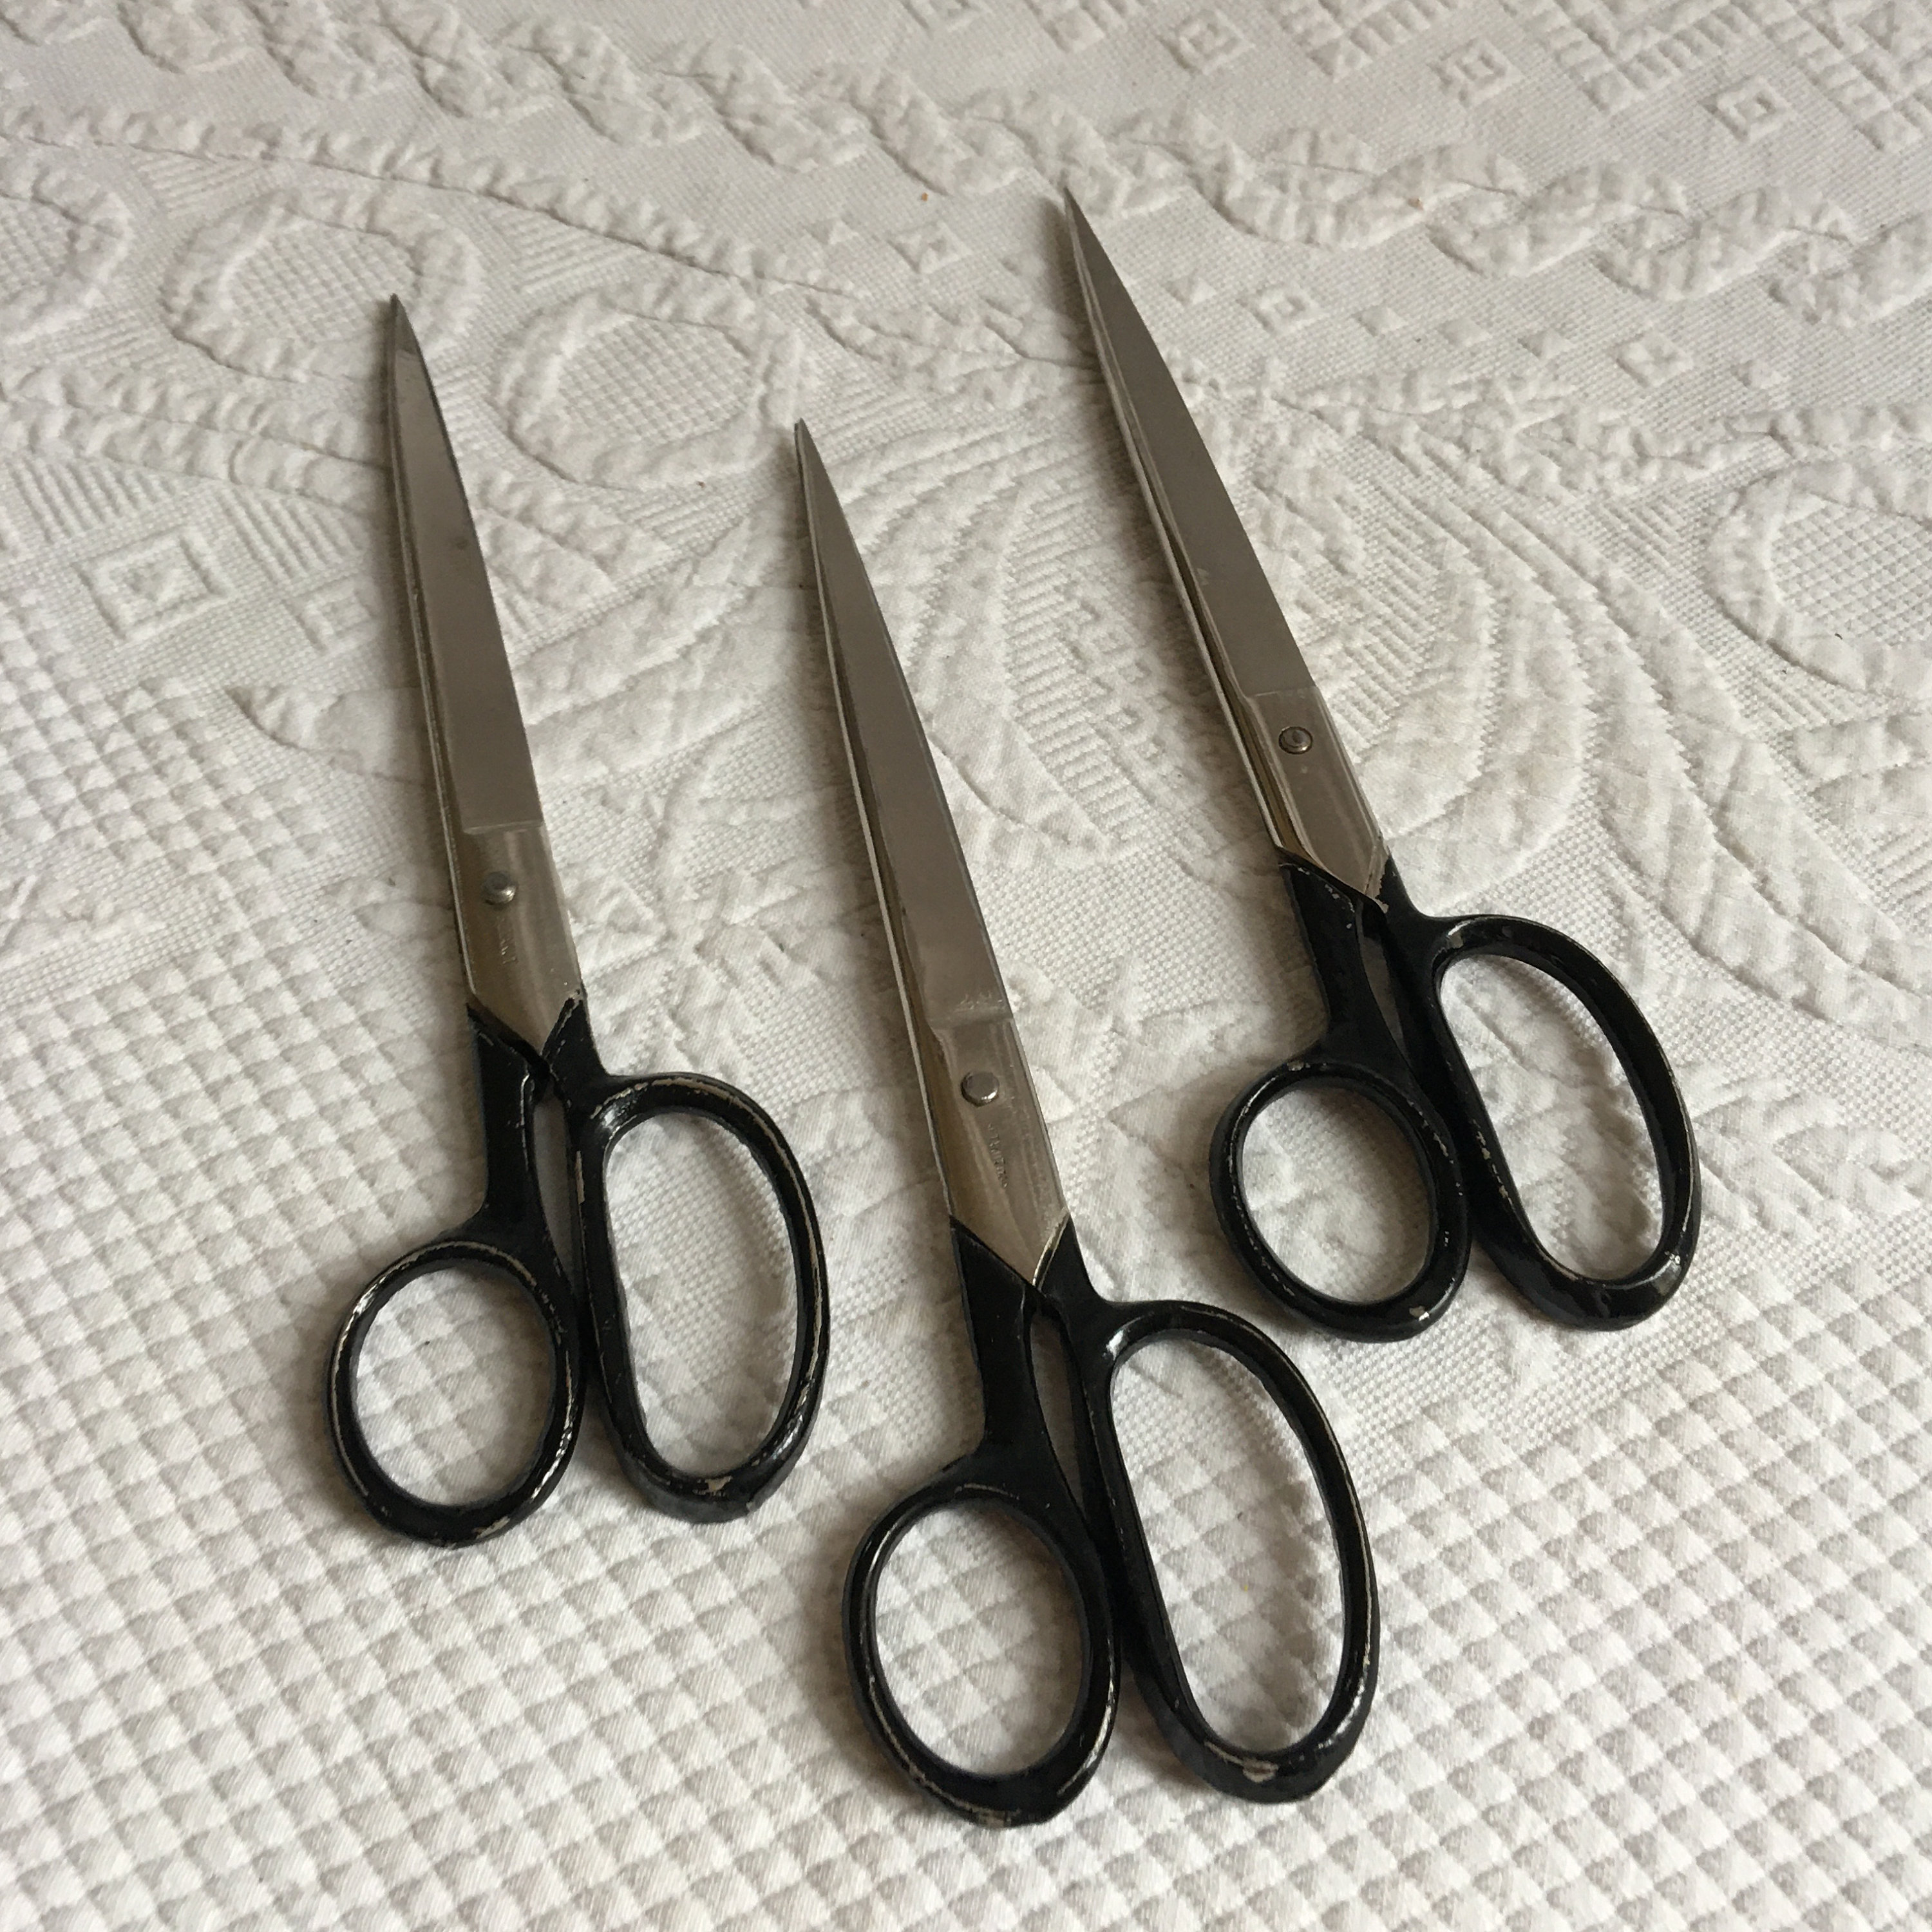 Fiskars 124582-1024 7 Non-stick Precision Tip Student Scissors 10